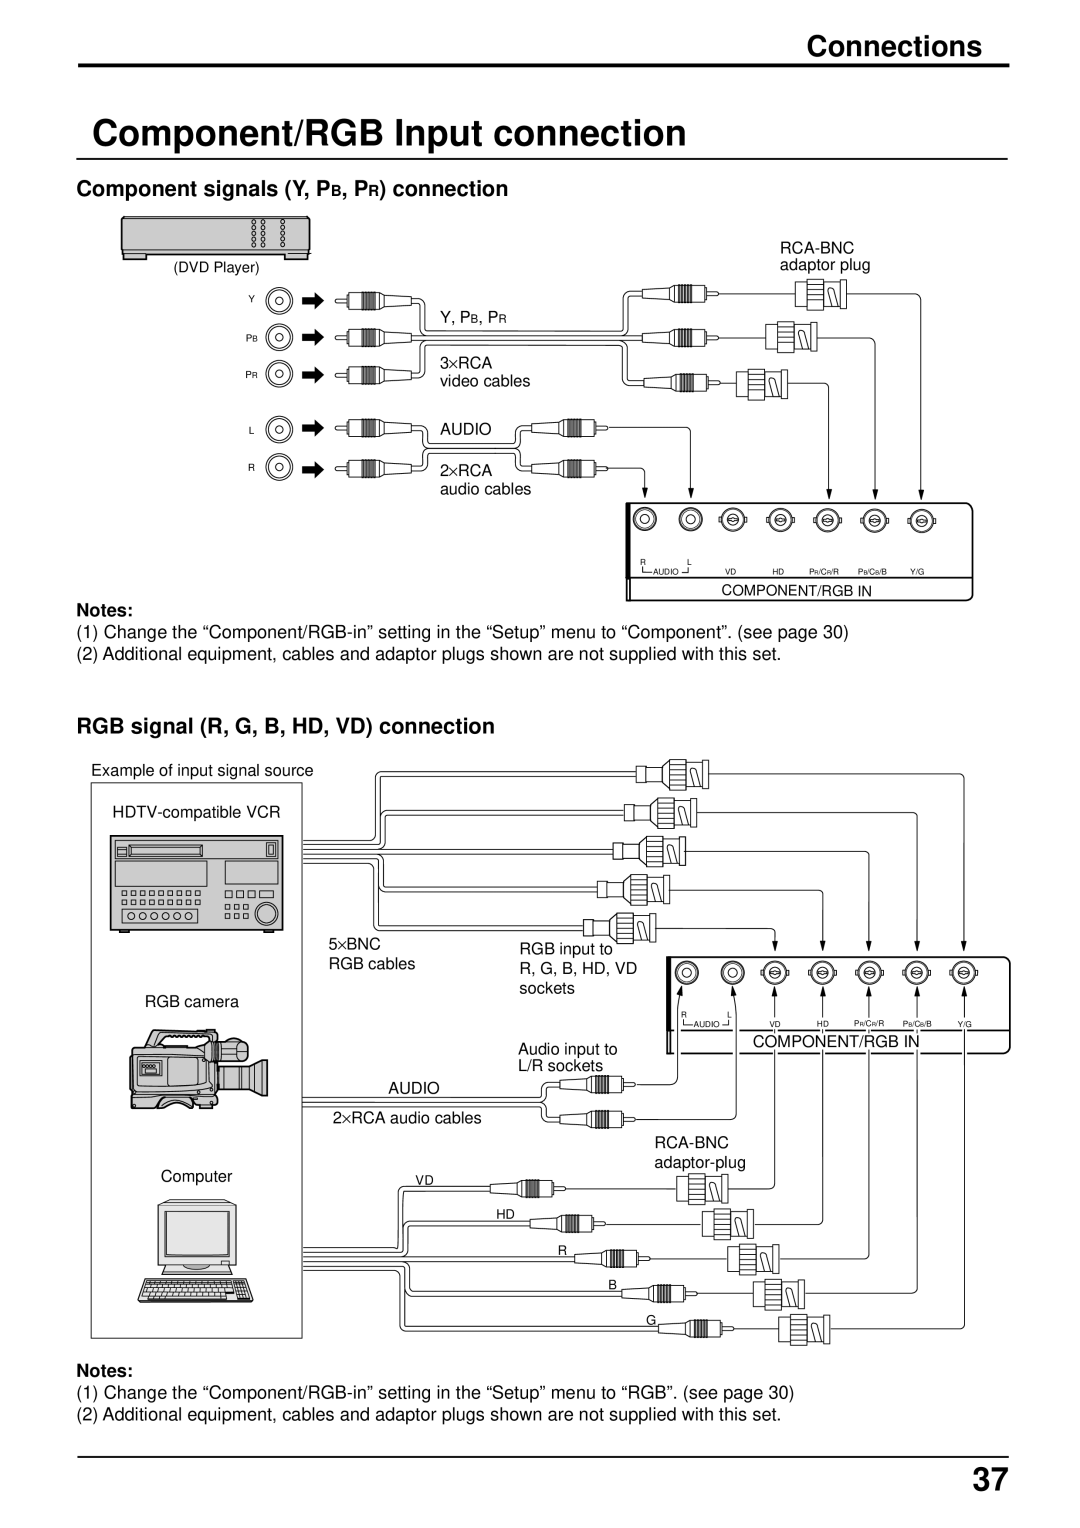 JVC GD-V501PCE manual Component/RGB Input connection, Component signals Y, PB, PR connection, Connections 